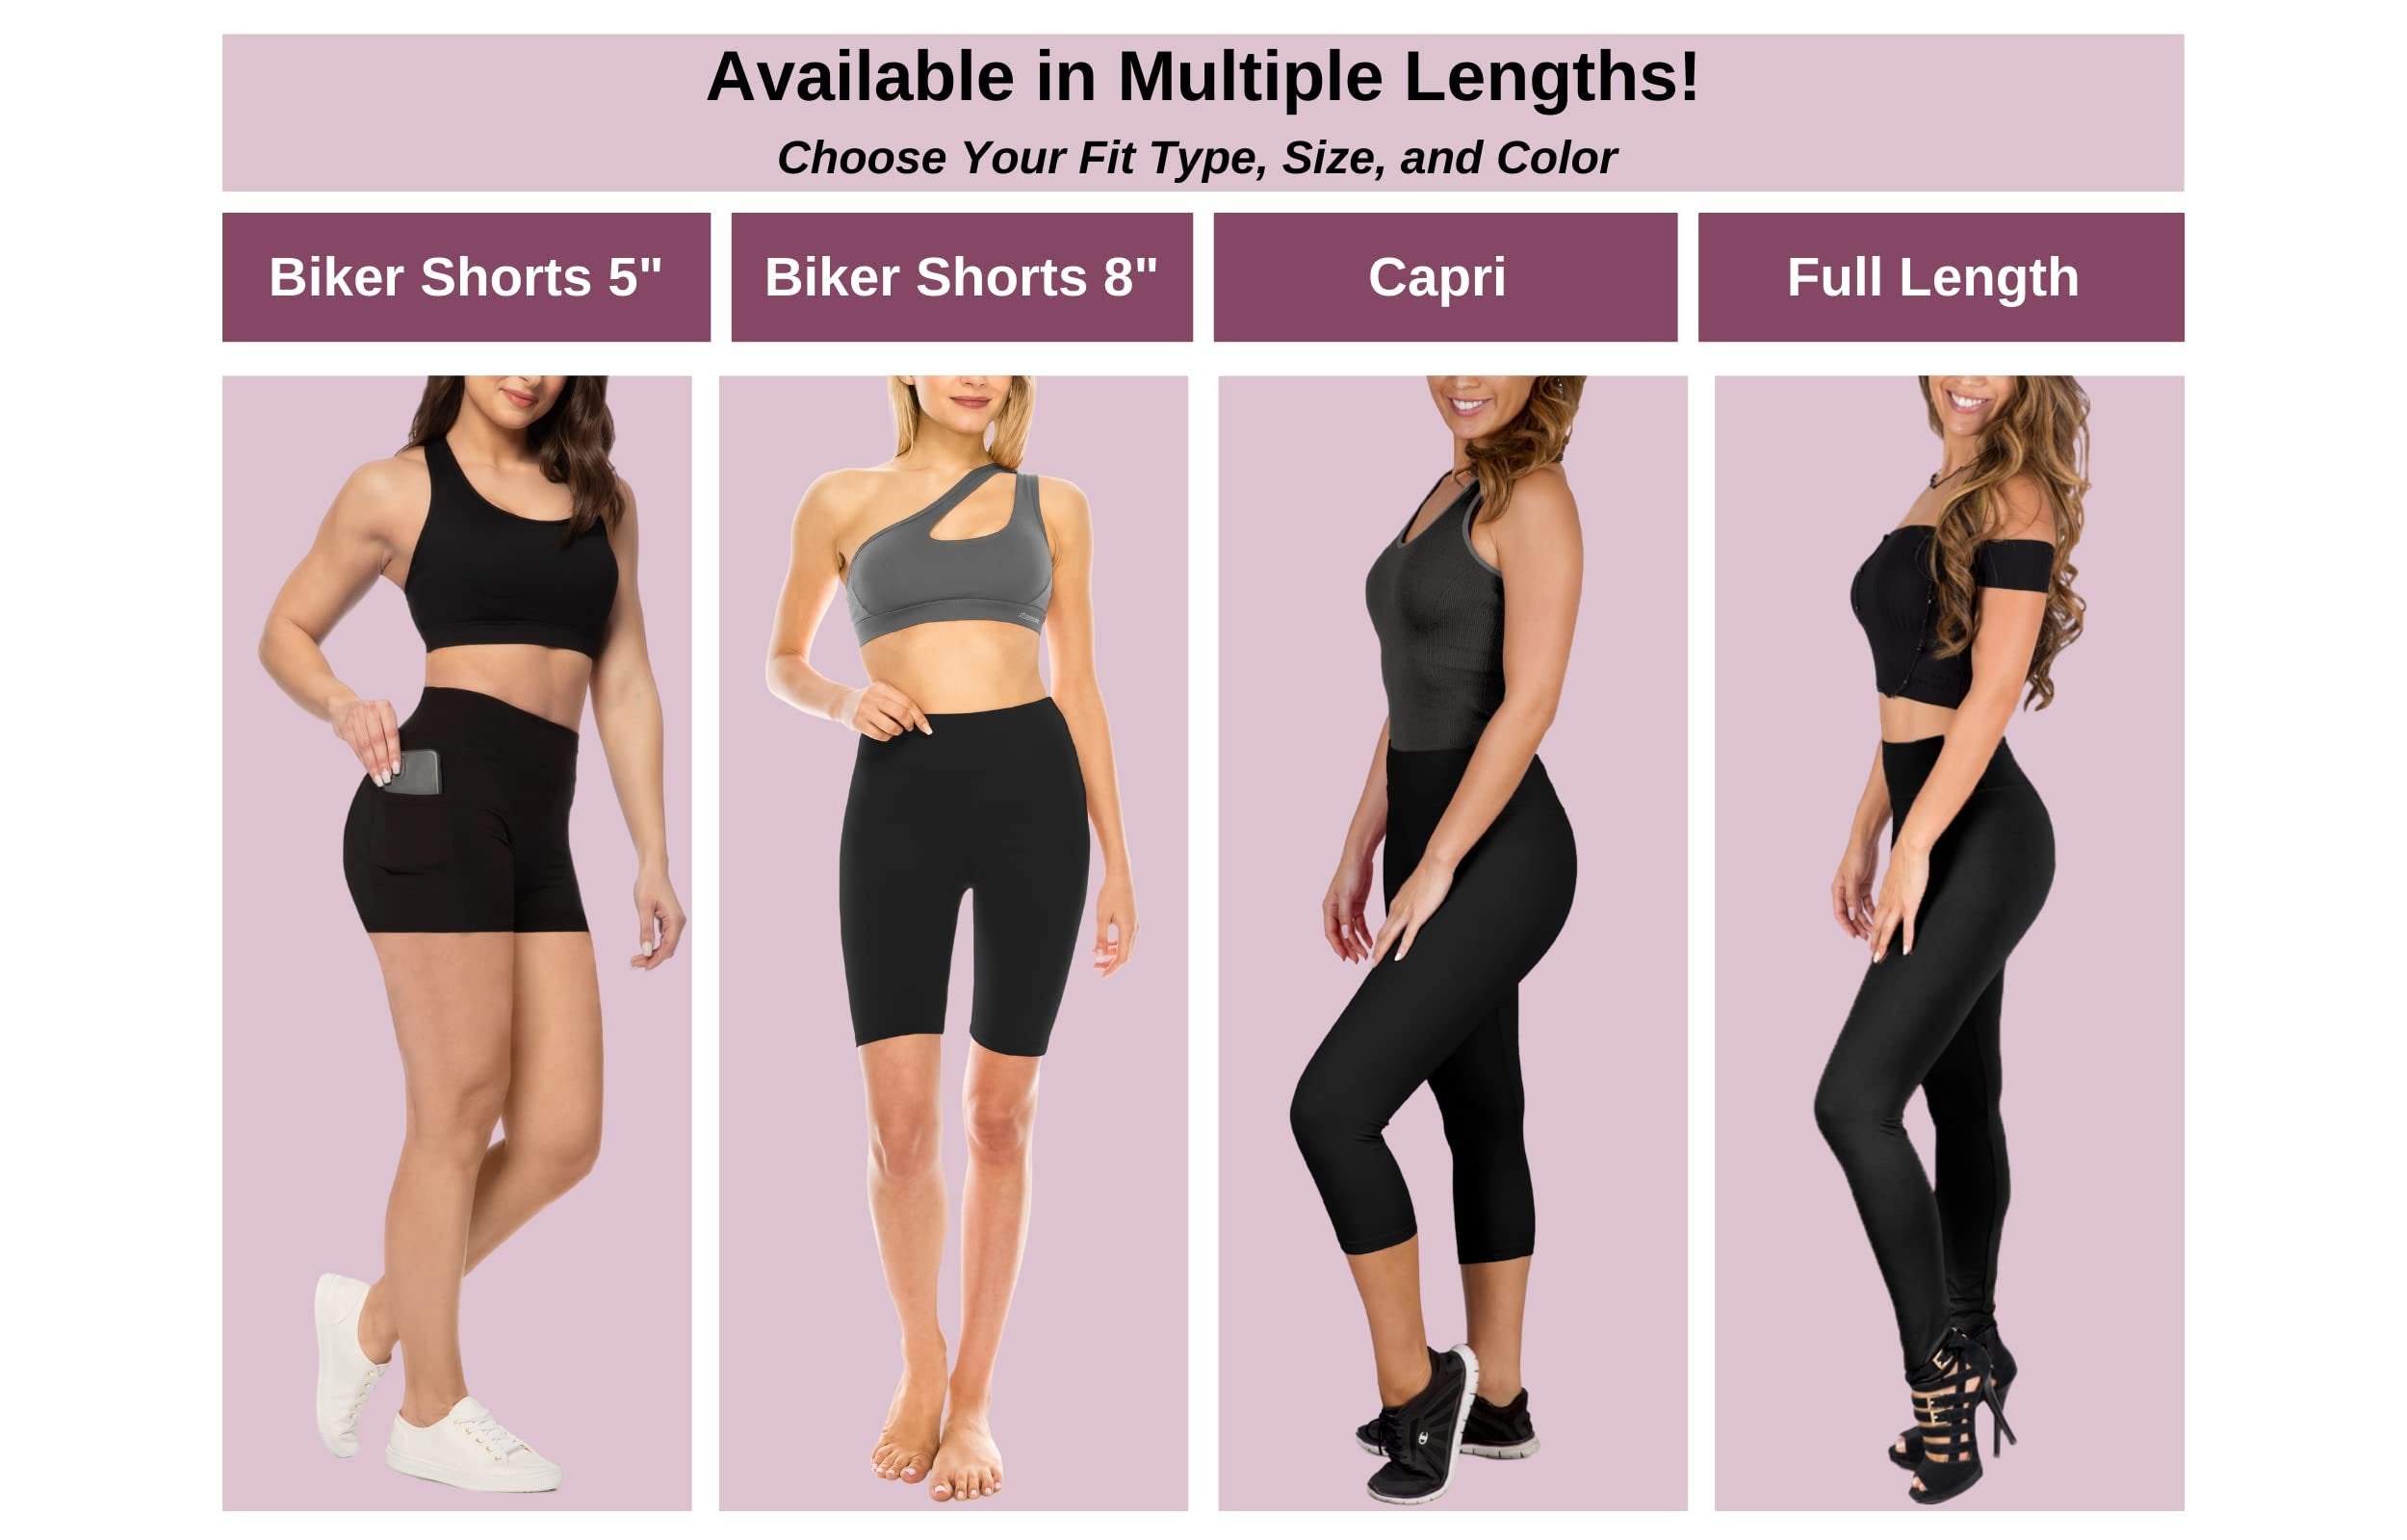 SATINA High Waisted Capri Leggings for Women - Capri Pants for Women - High Waist for Tummy Control - Old Rose Capri Leggings for Yoga |3 Inch Waistband (One Size, Old Rose)